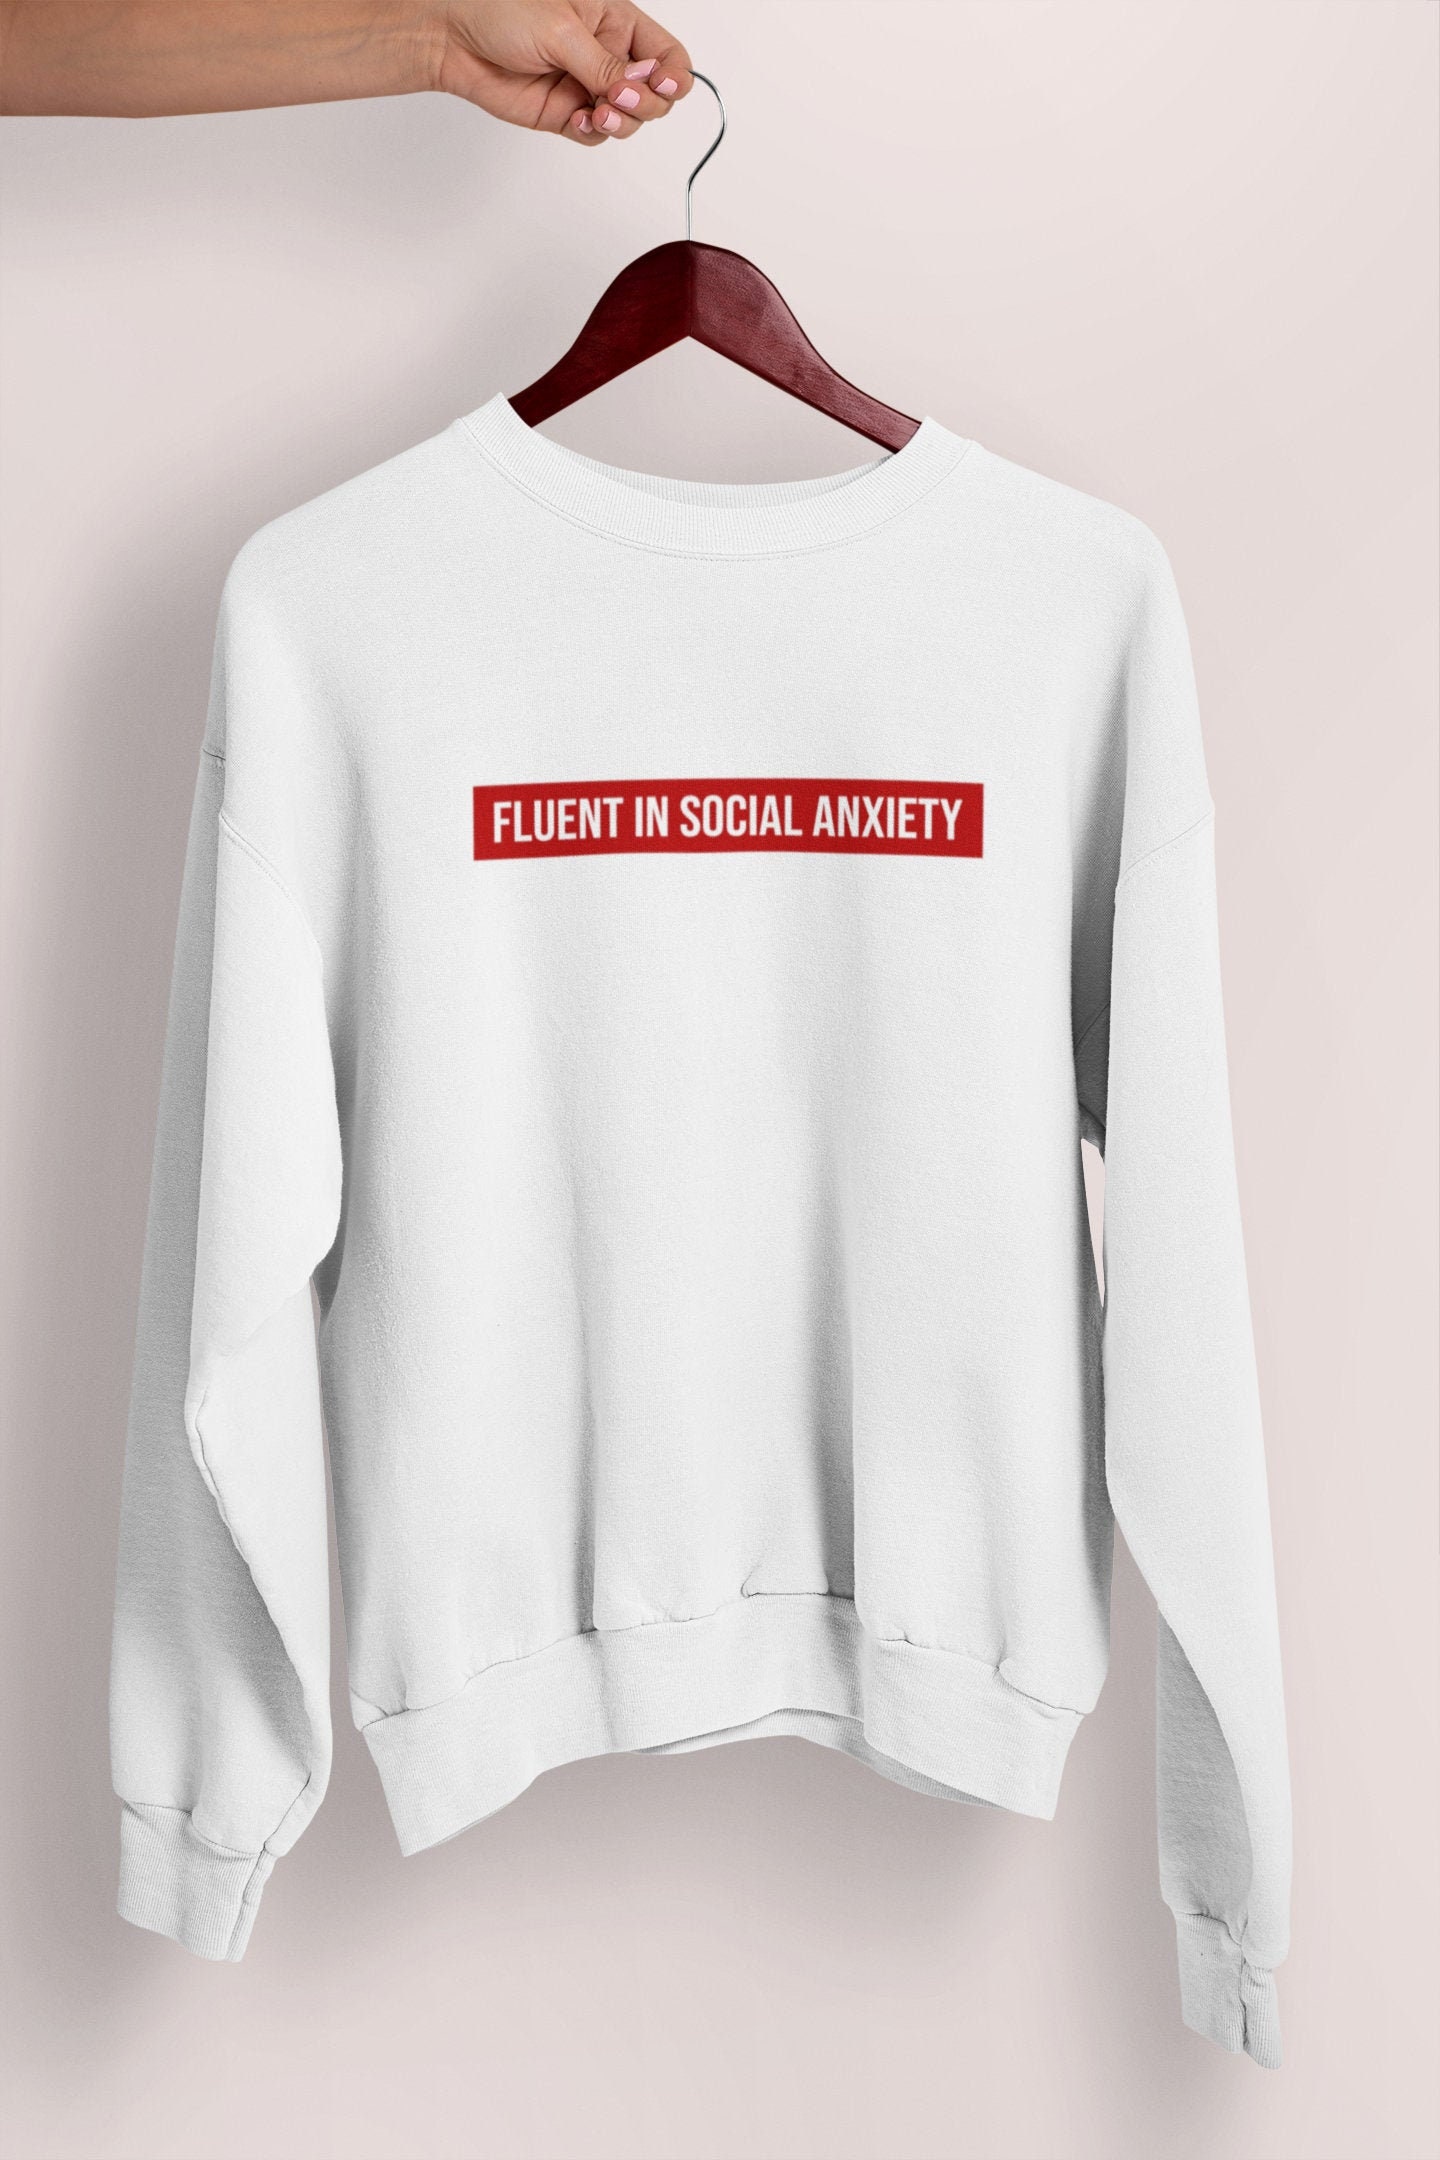 Fluent in Social Anxiety Sweatshirt White Sweatshirt Social | Etsy